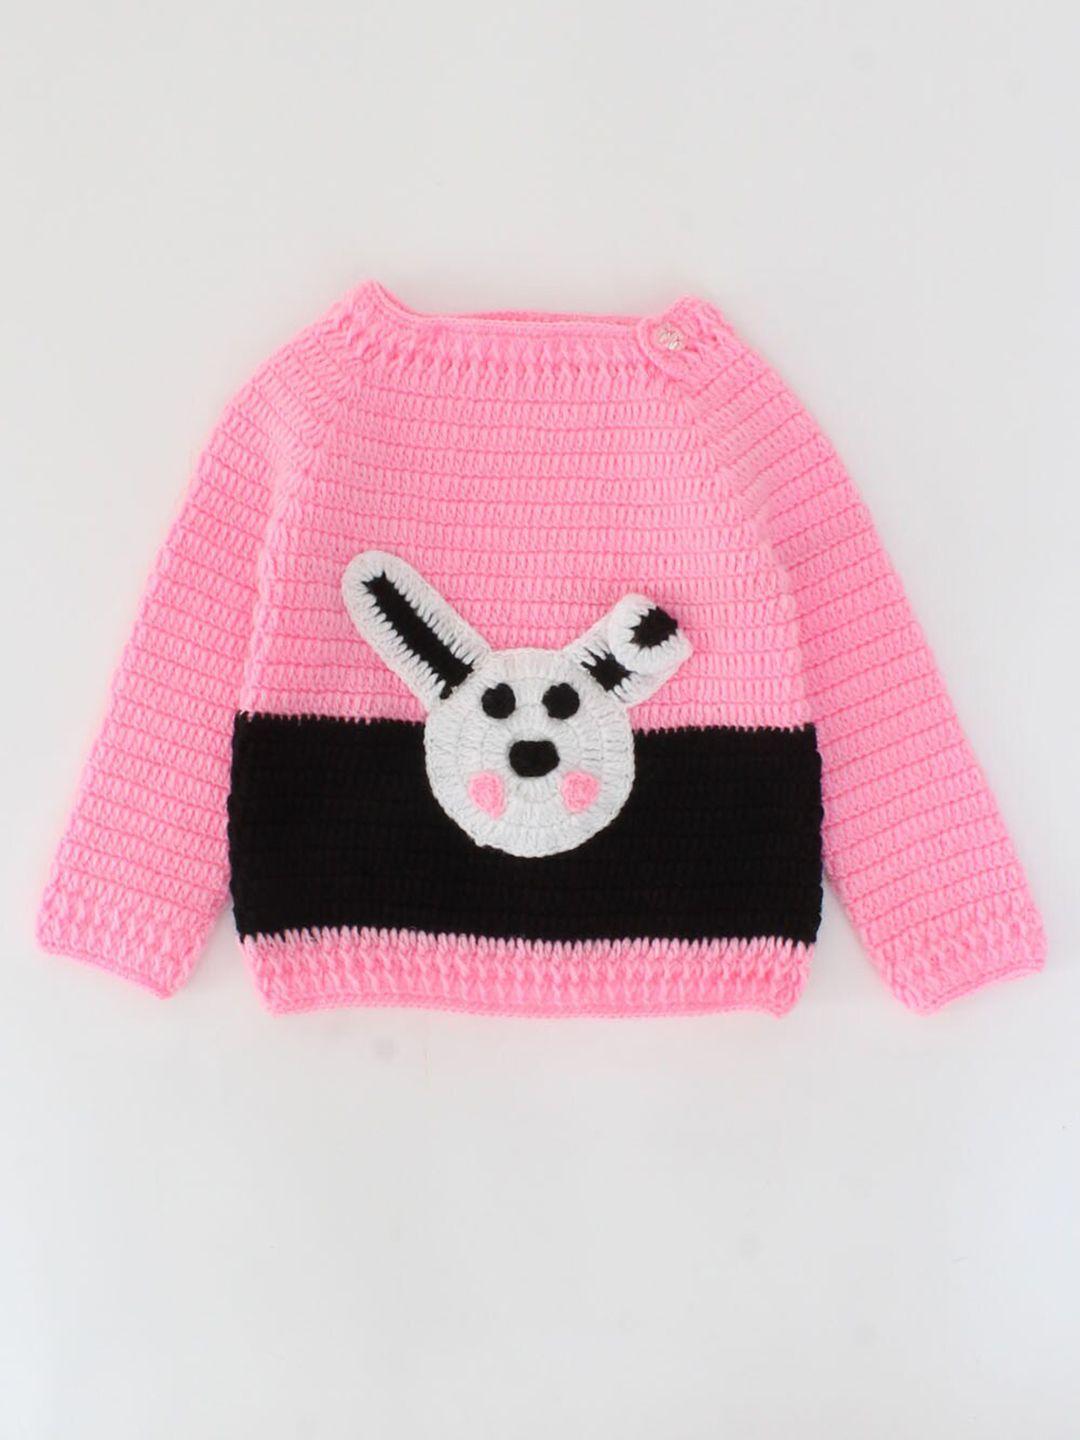 woonie unisex kids black & pink animal striped pullover with applique detail